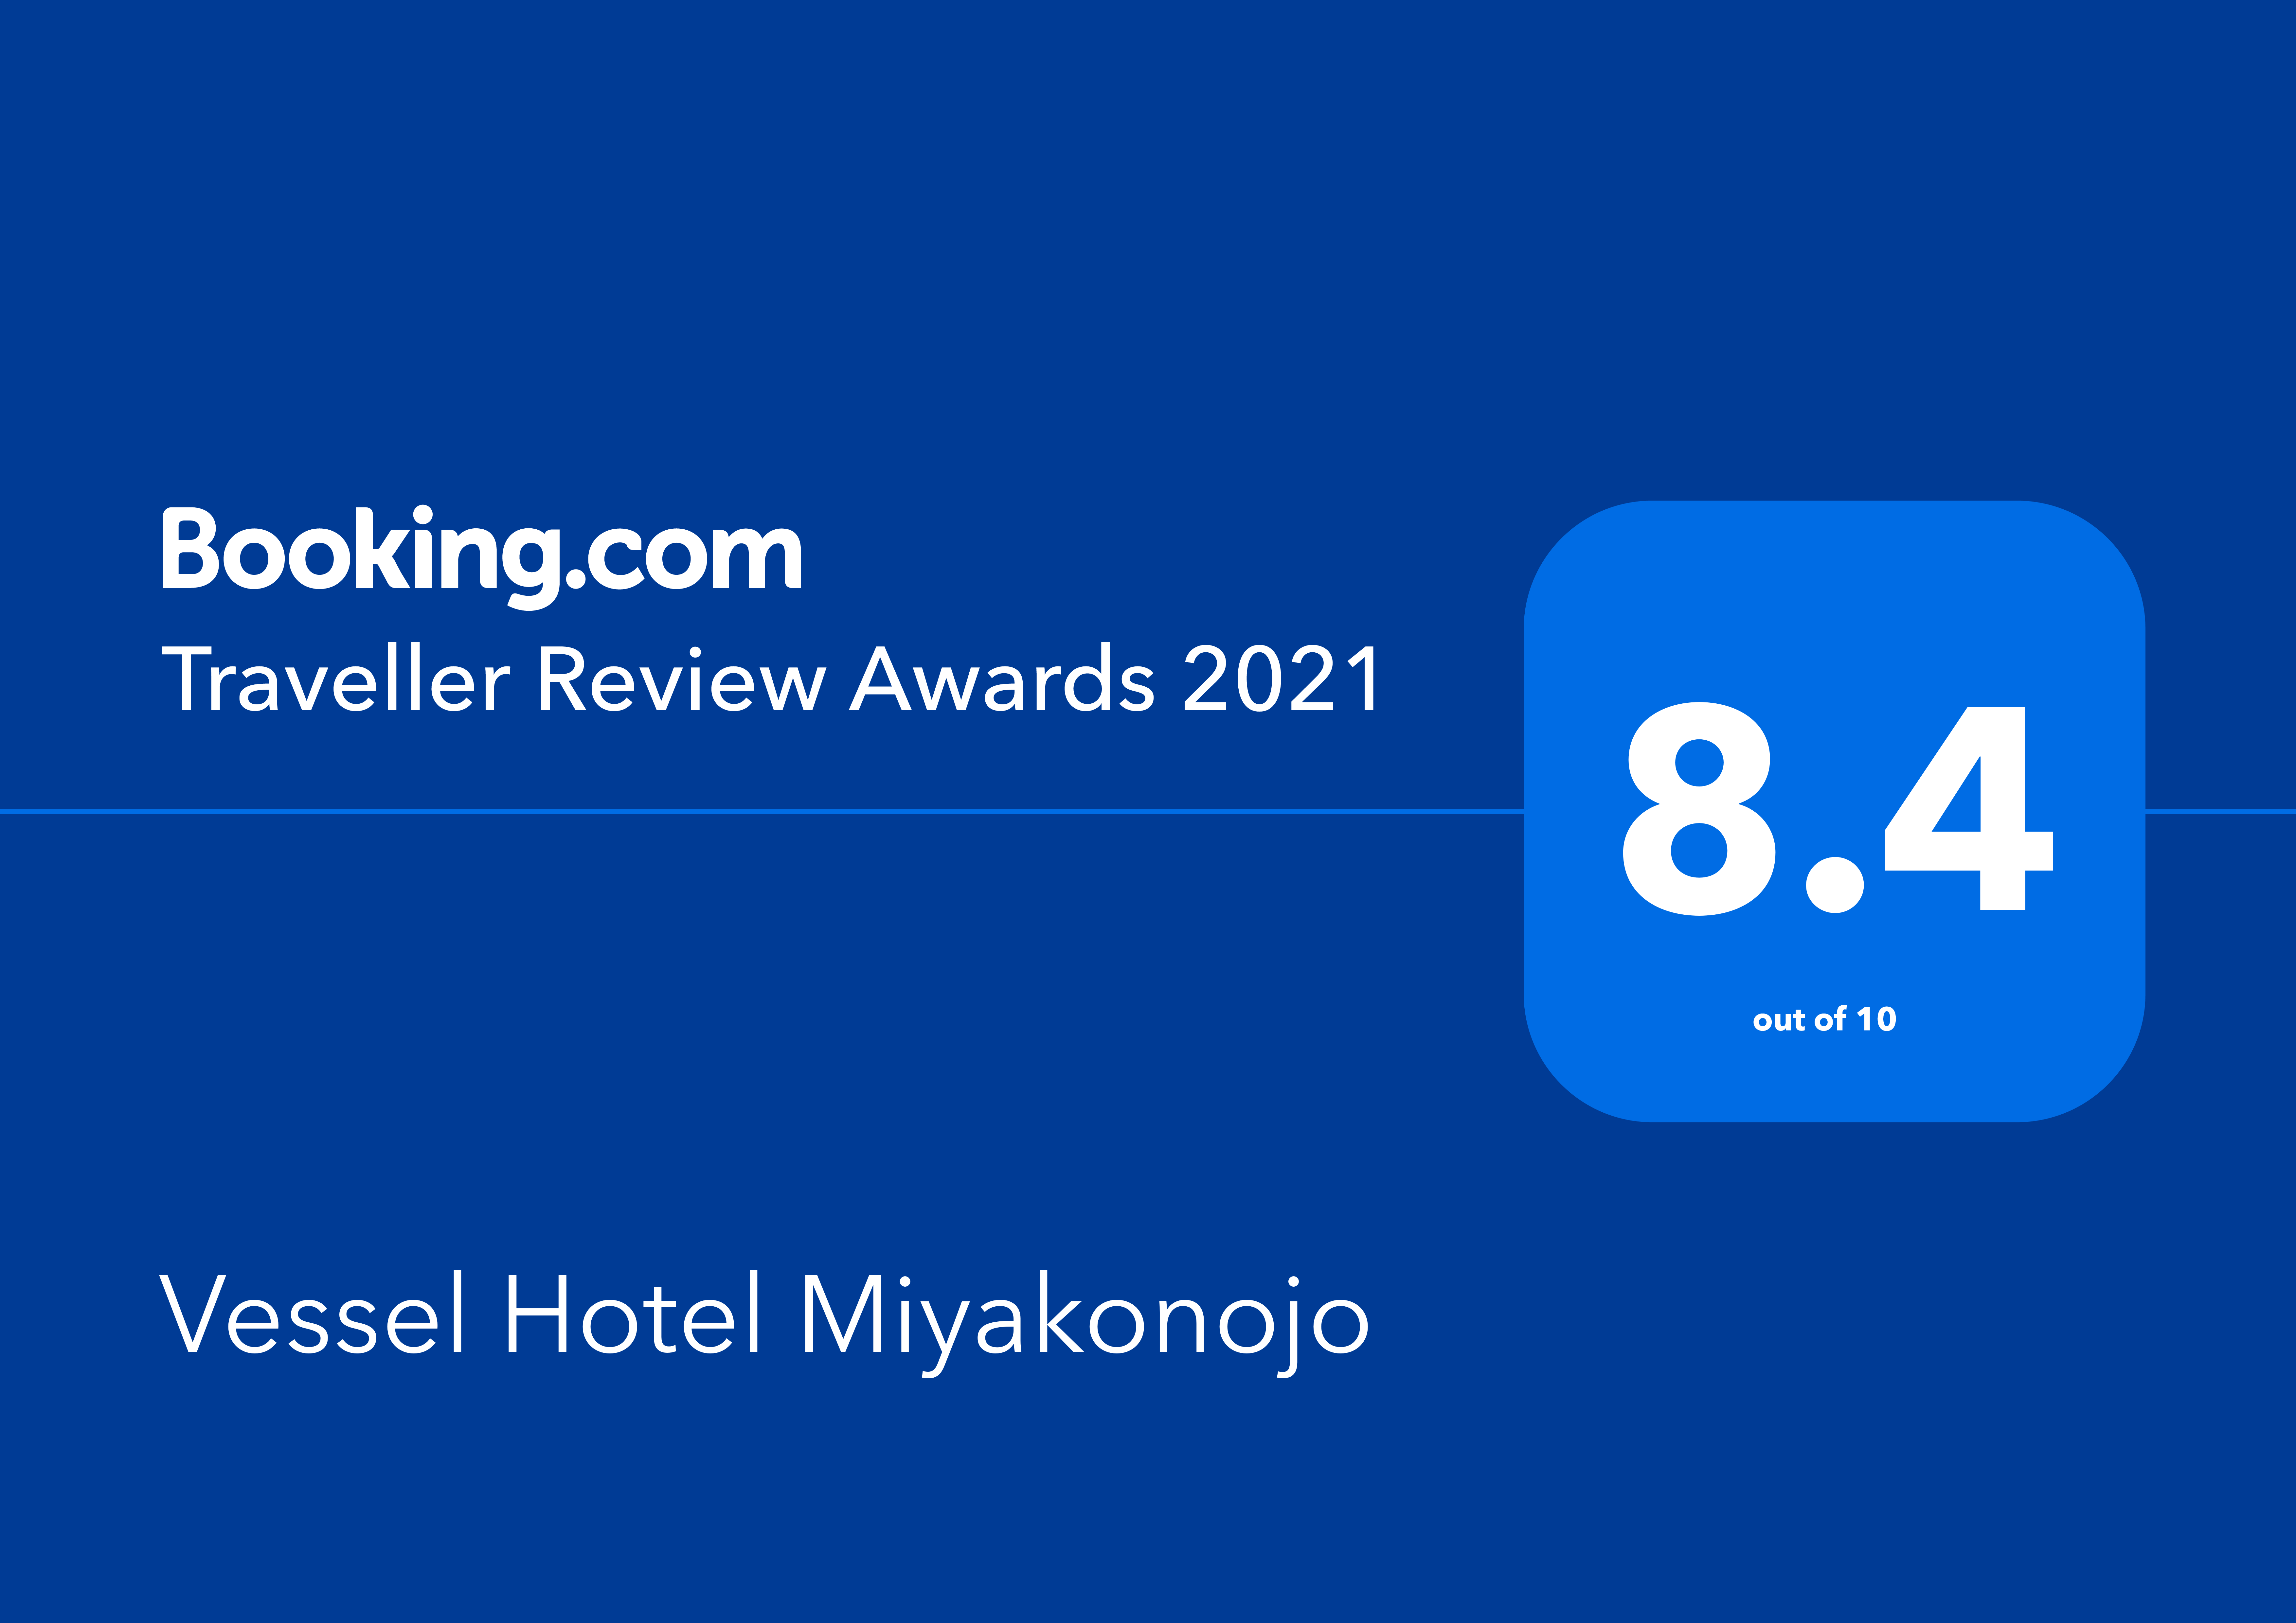 Booking.com“ 2021年旅行者評論獎”獲得者